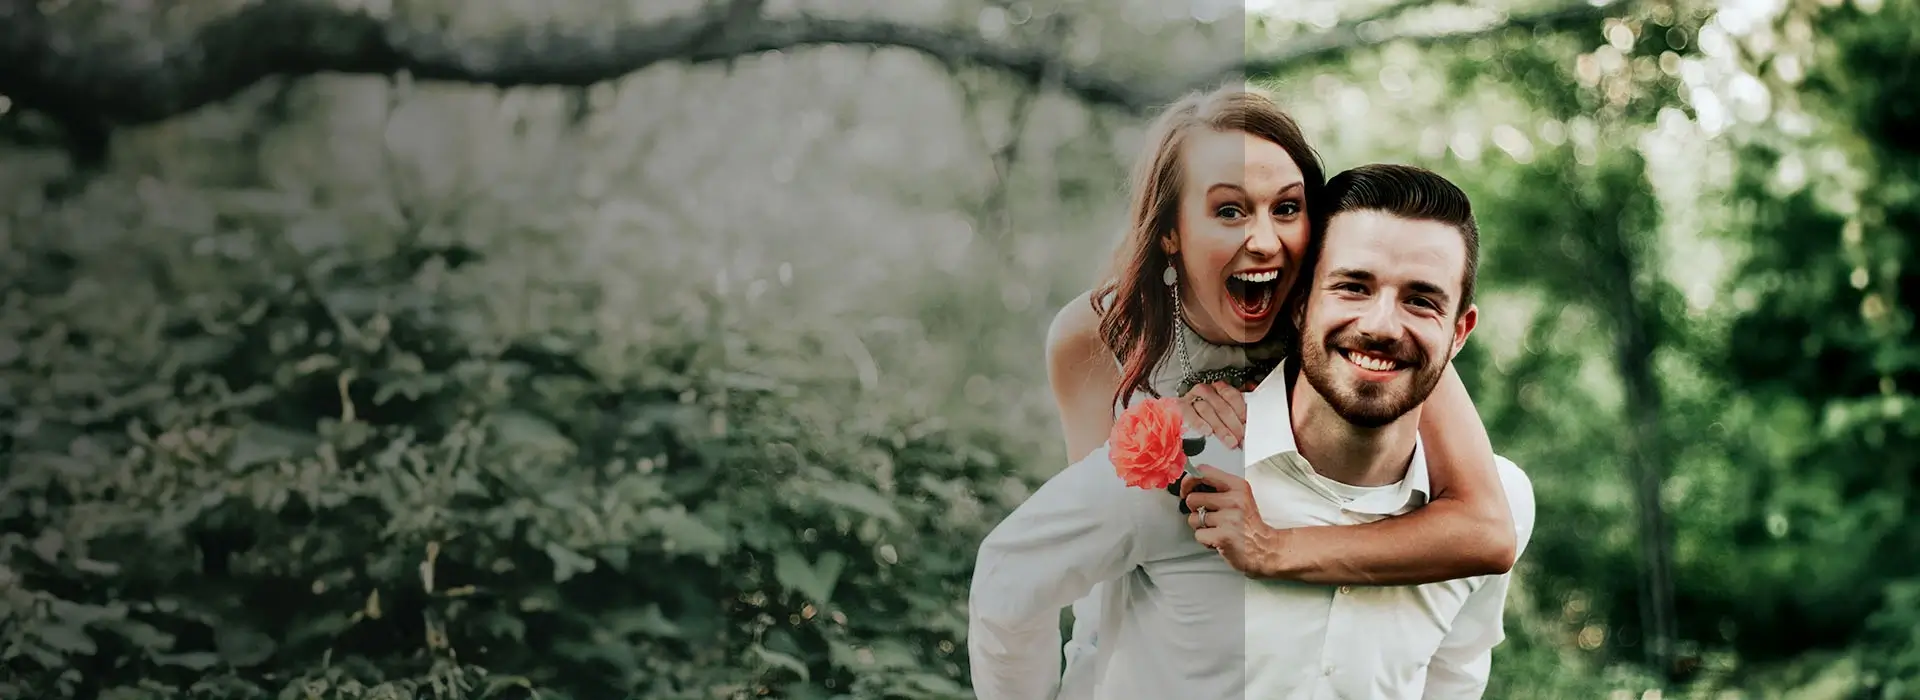 pre wedding photoshoot image editing